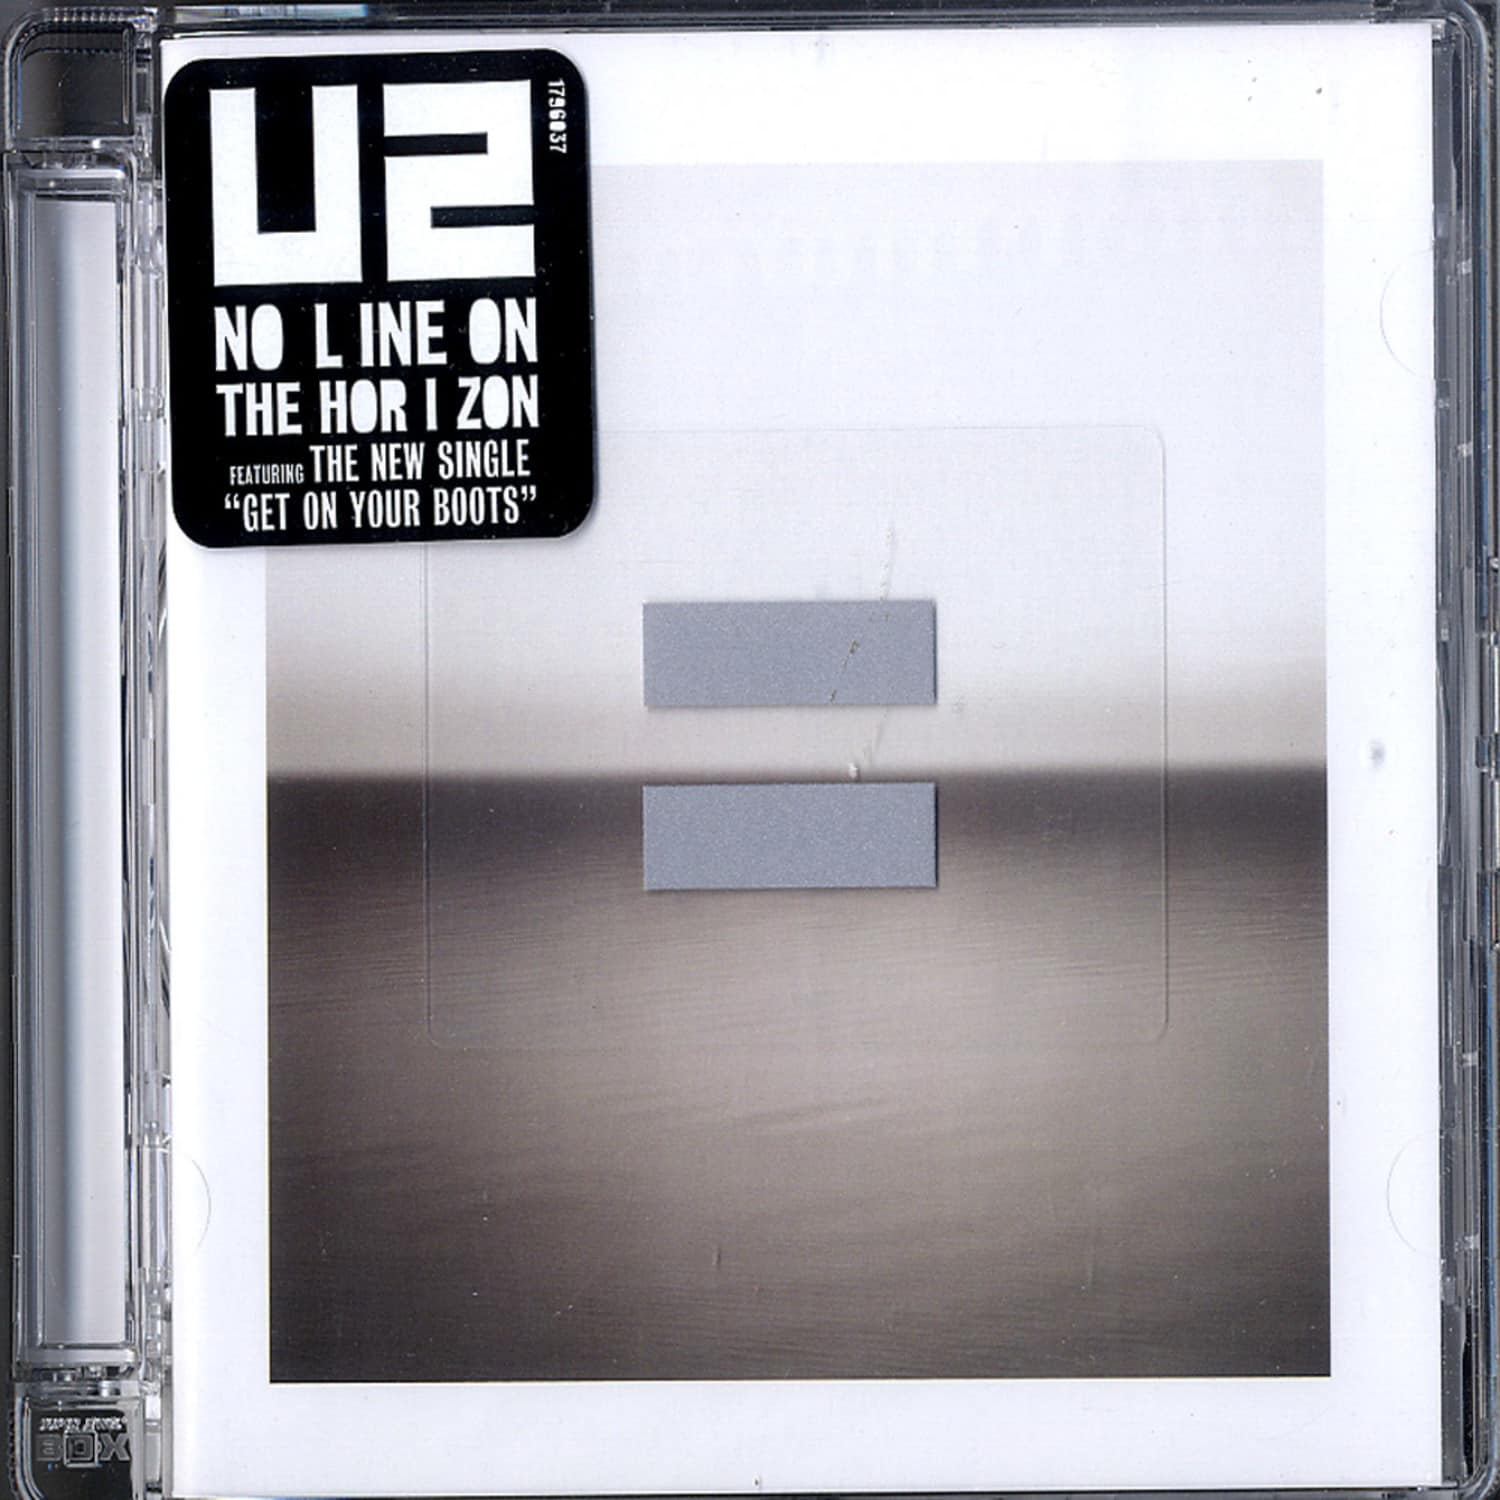 U2 - NO LINE ON THE HORIZON 